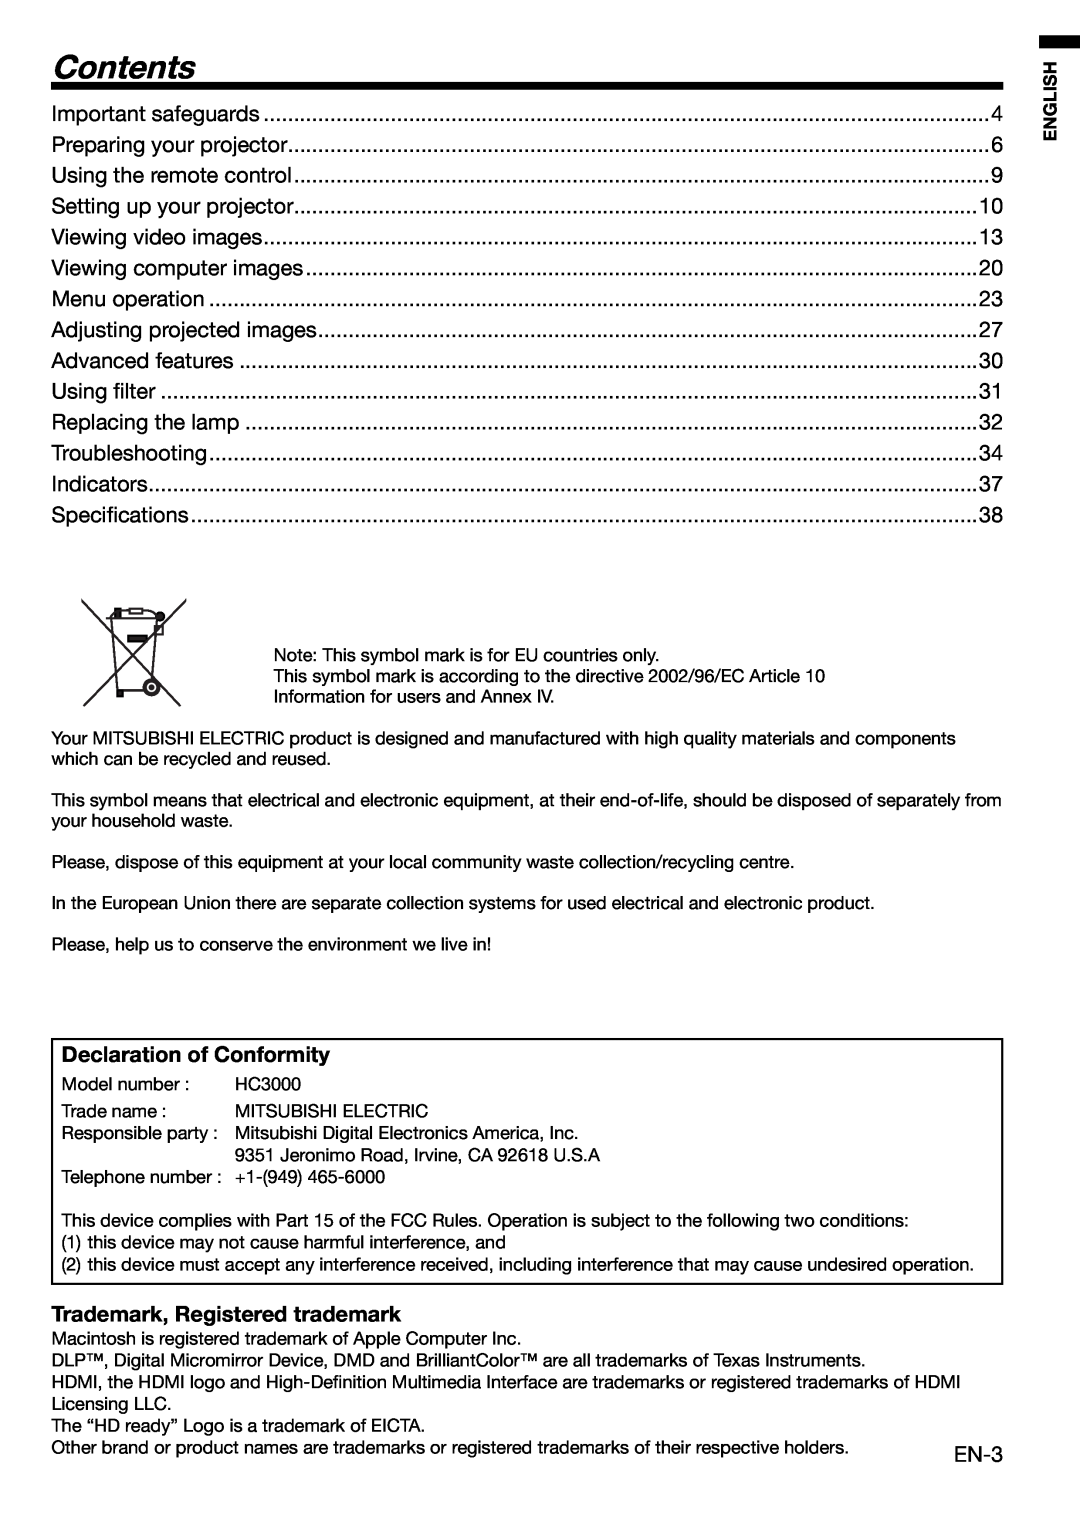 Mitsubishi Electronics HC3000 user manual Contents, Declaration of Conformity, Trademark, Registered trademark 